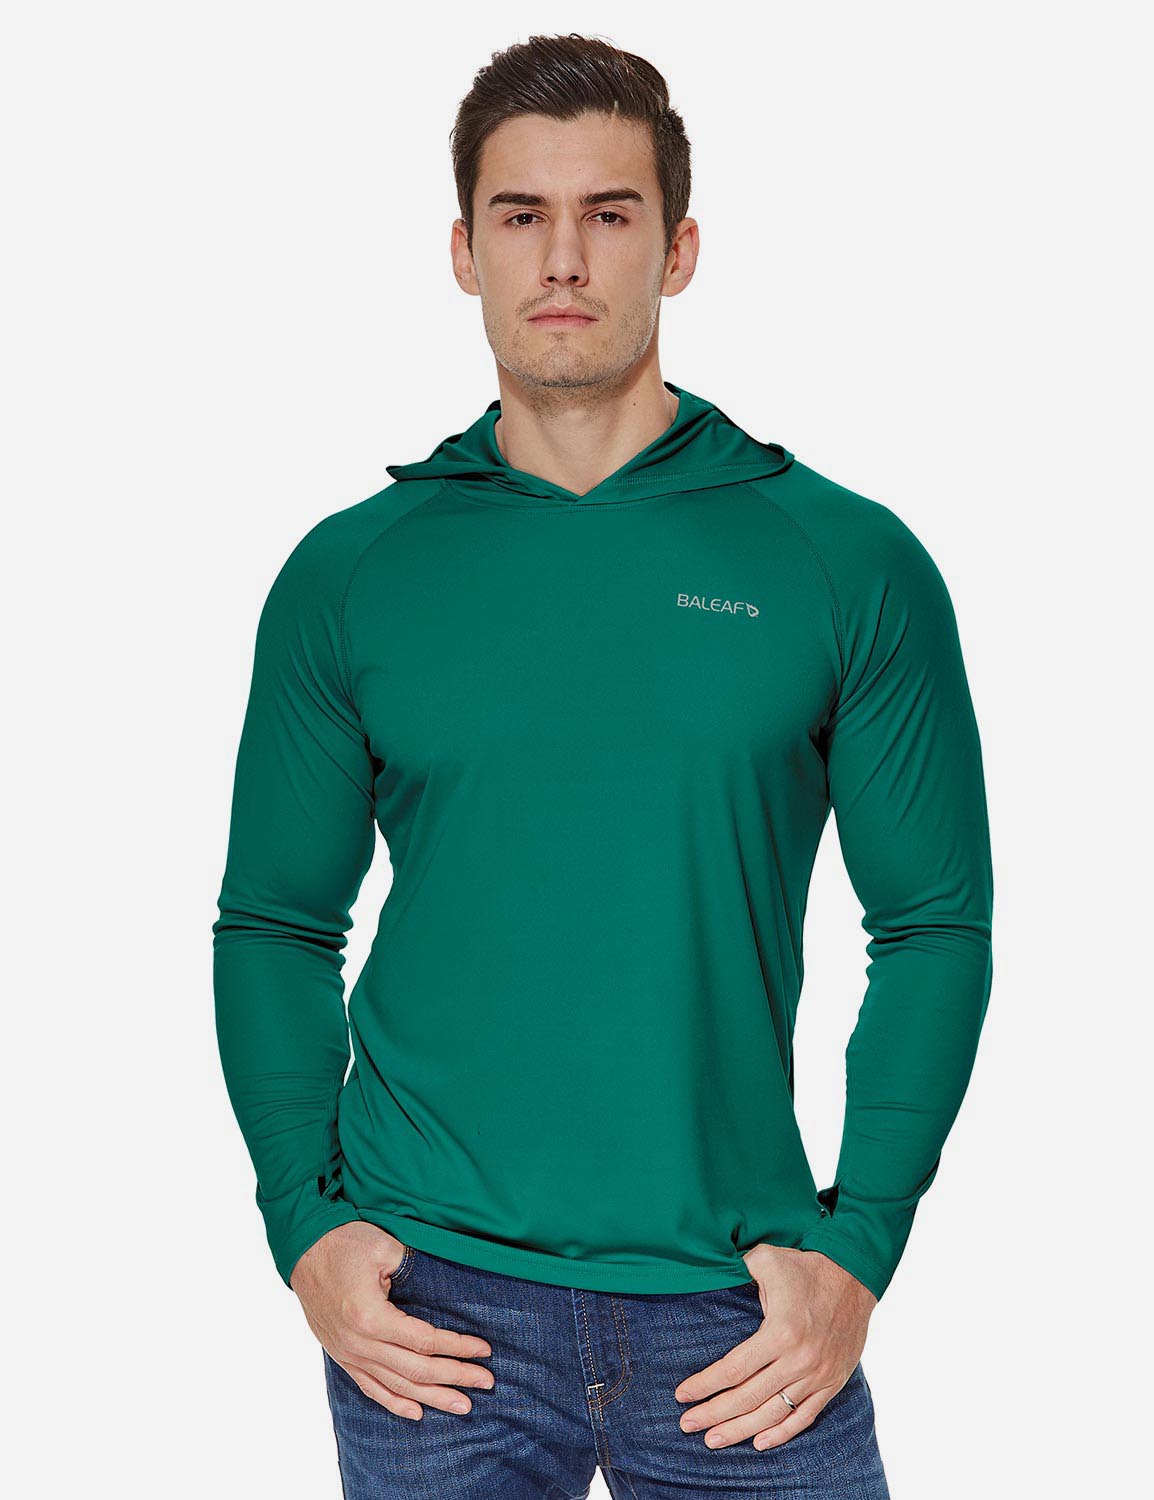 Baleaf Men's UPF50+ Hooded & Thumbhole Comfort Fit Long Sleeved Shirt aga030 Emerald Front